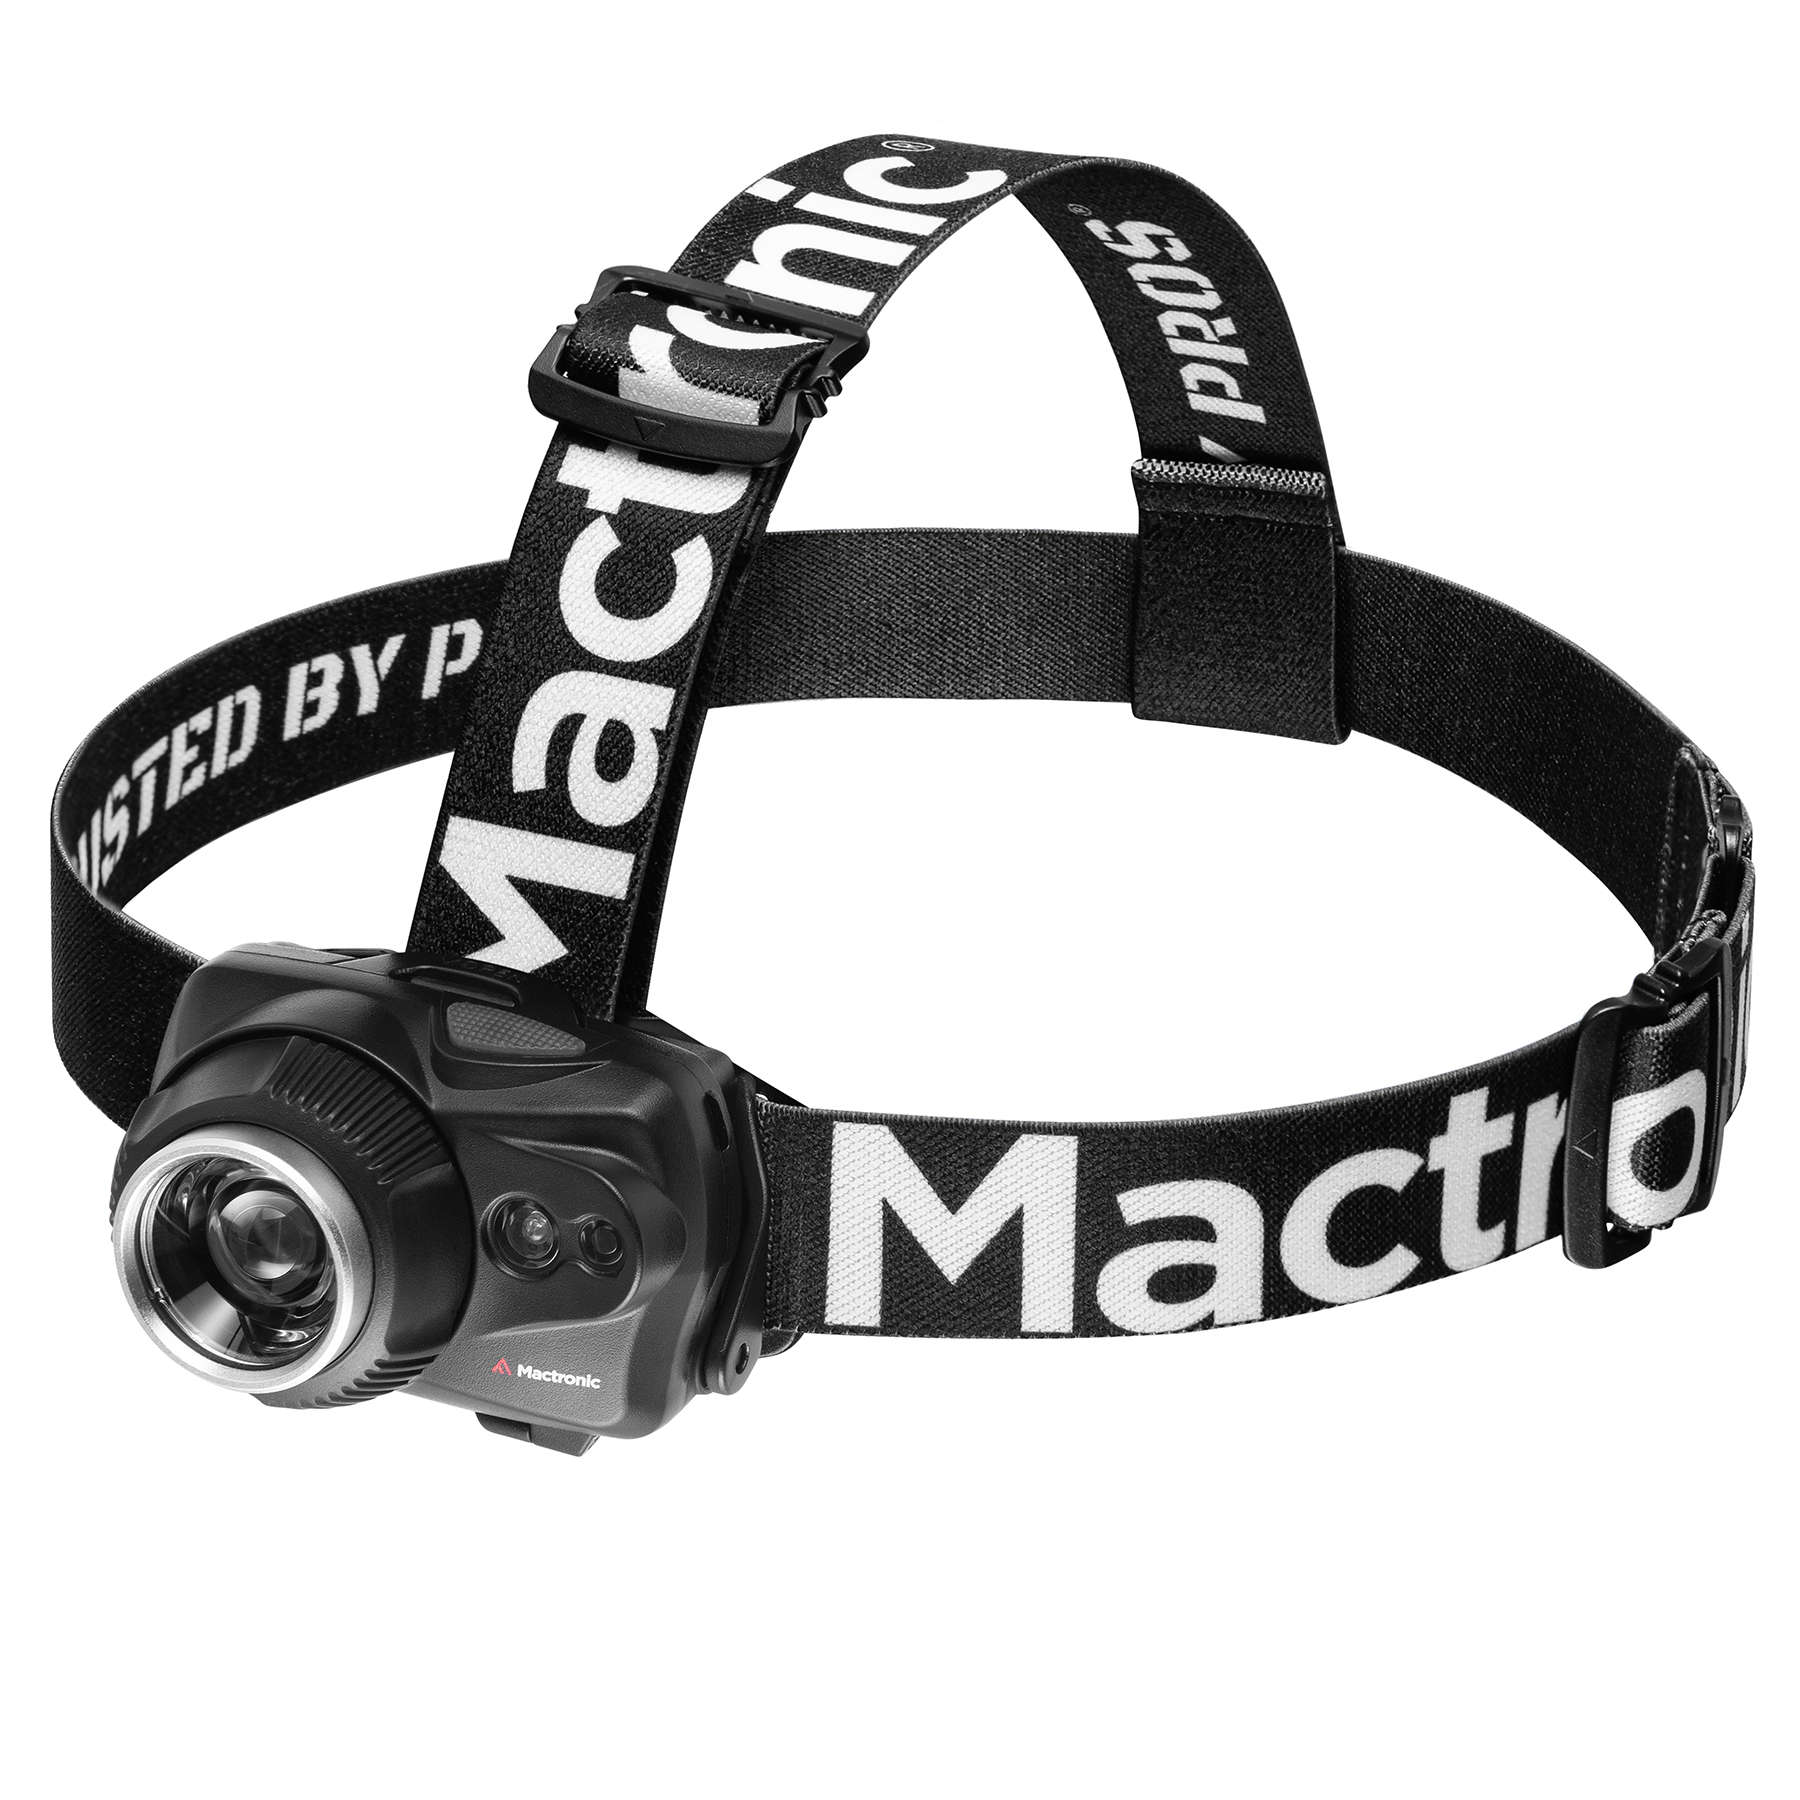 ˳  Mactronic Maverick (510 Lm) Focus USB Rechargeable (AHL0051)